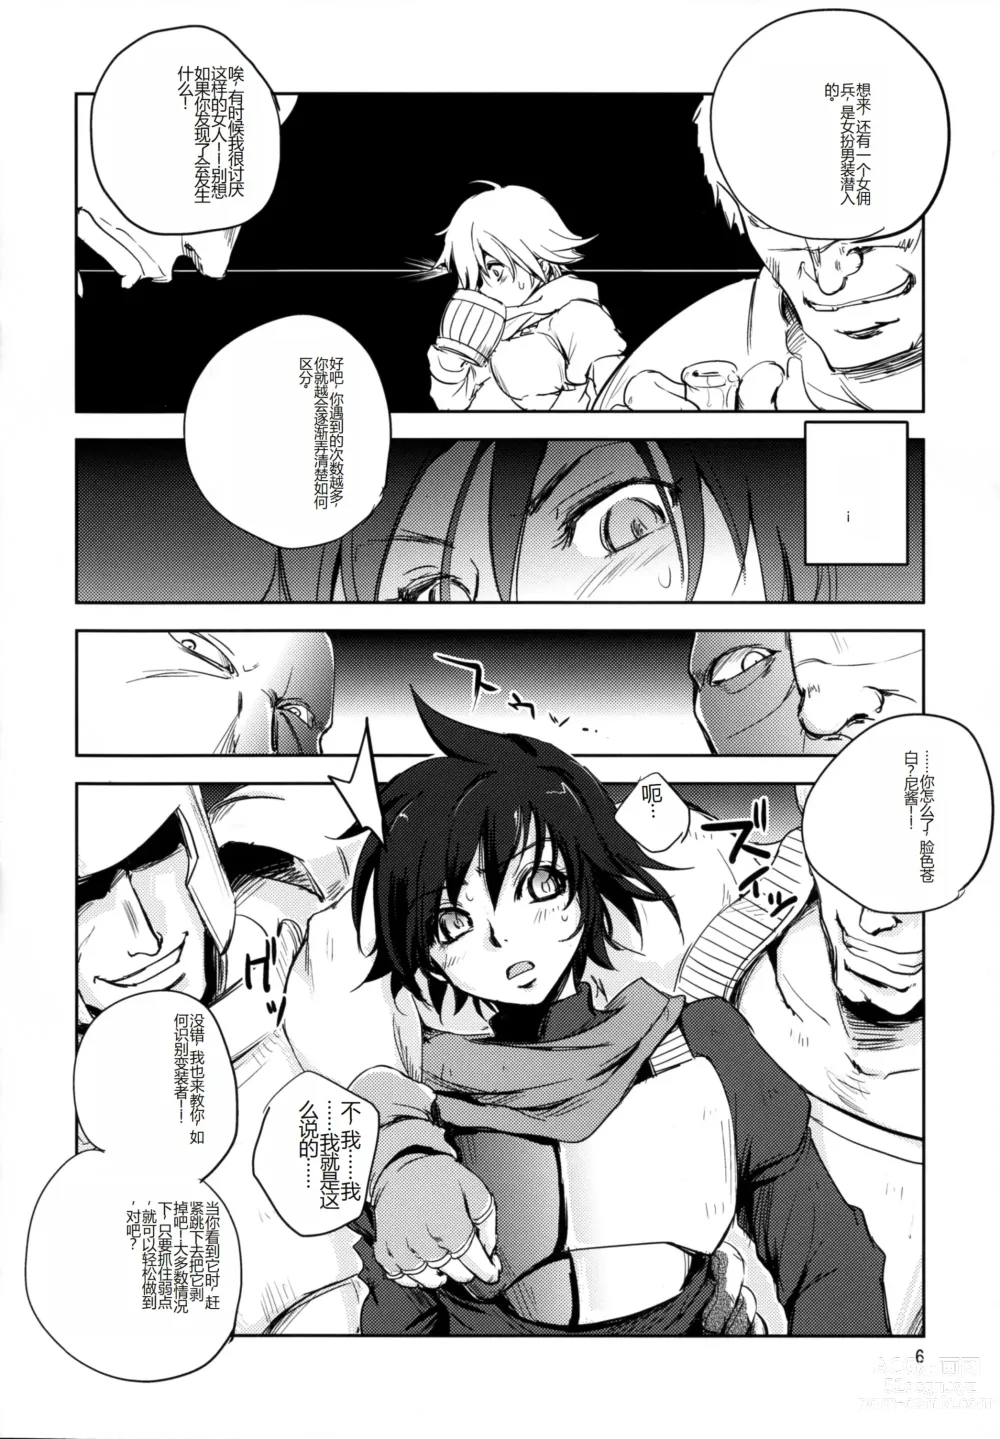 Page 6 of doujinshi GRASSENS WAR ANOTHER STORY Ex #05 Node Shinkou V